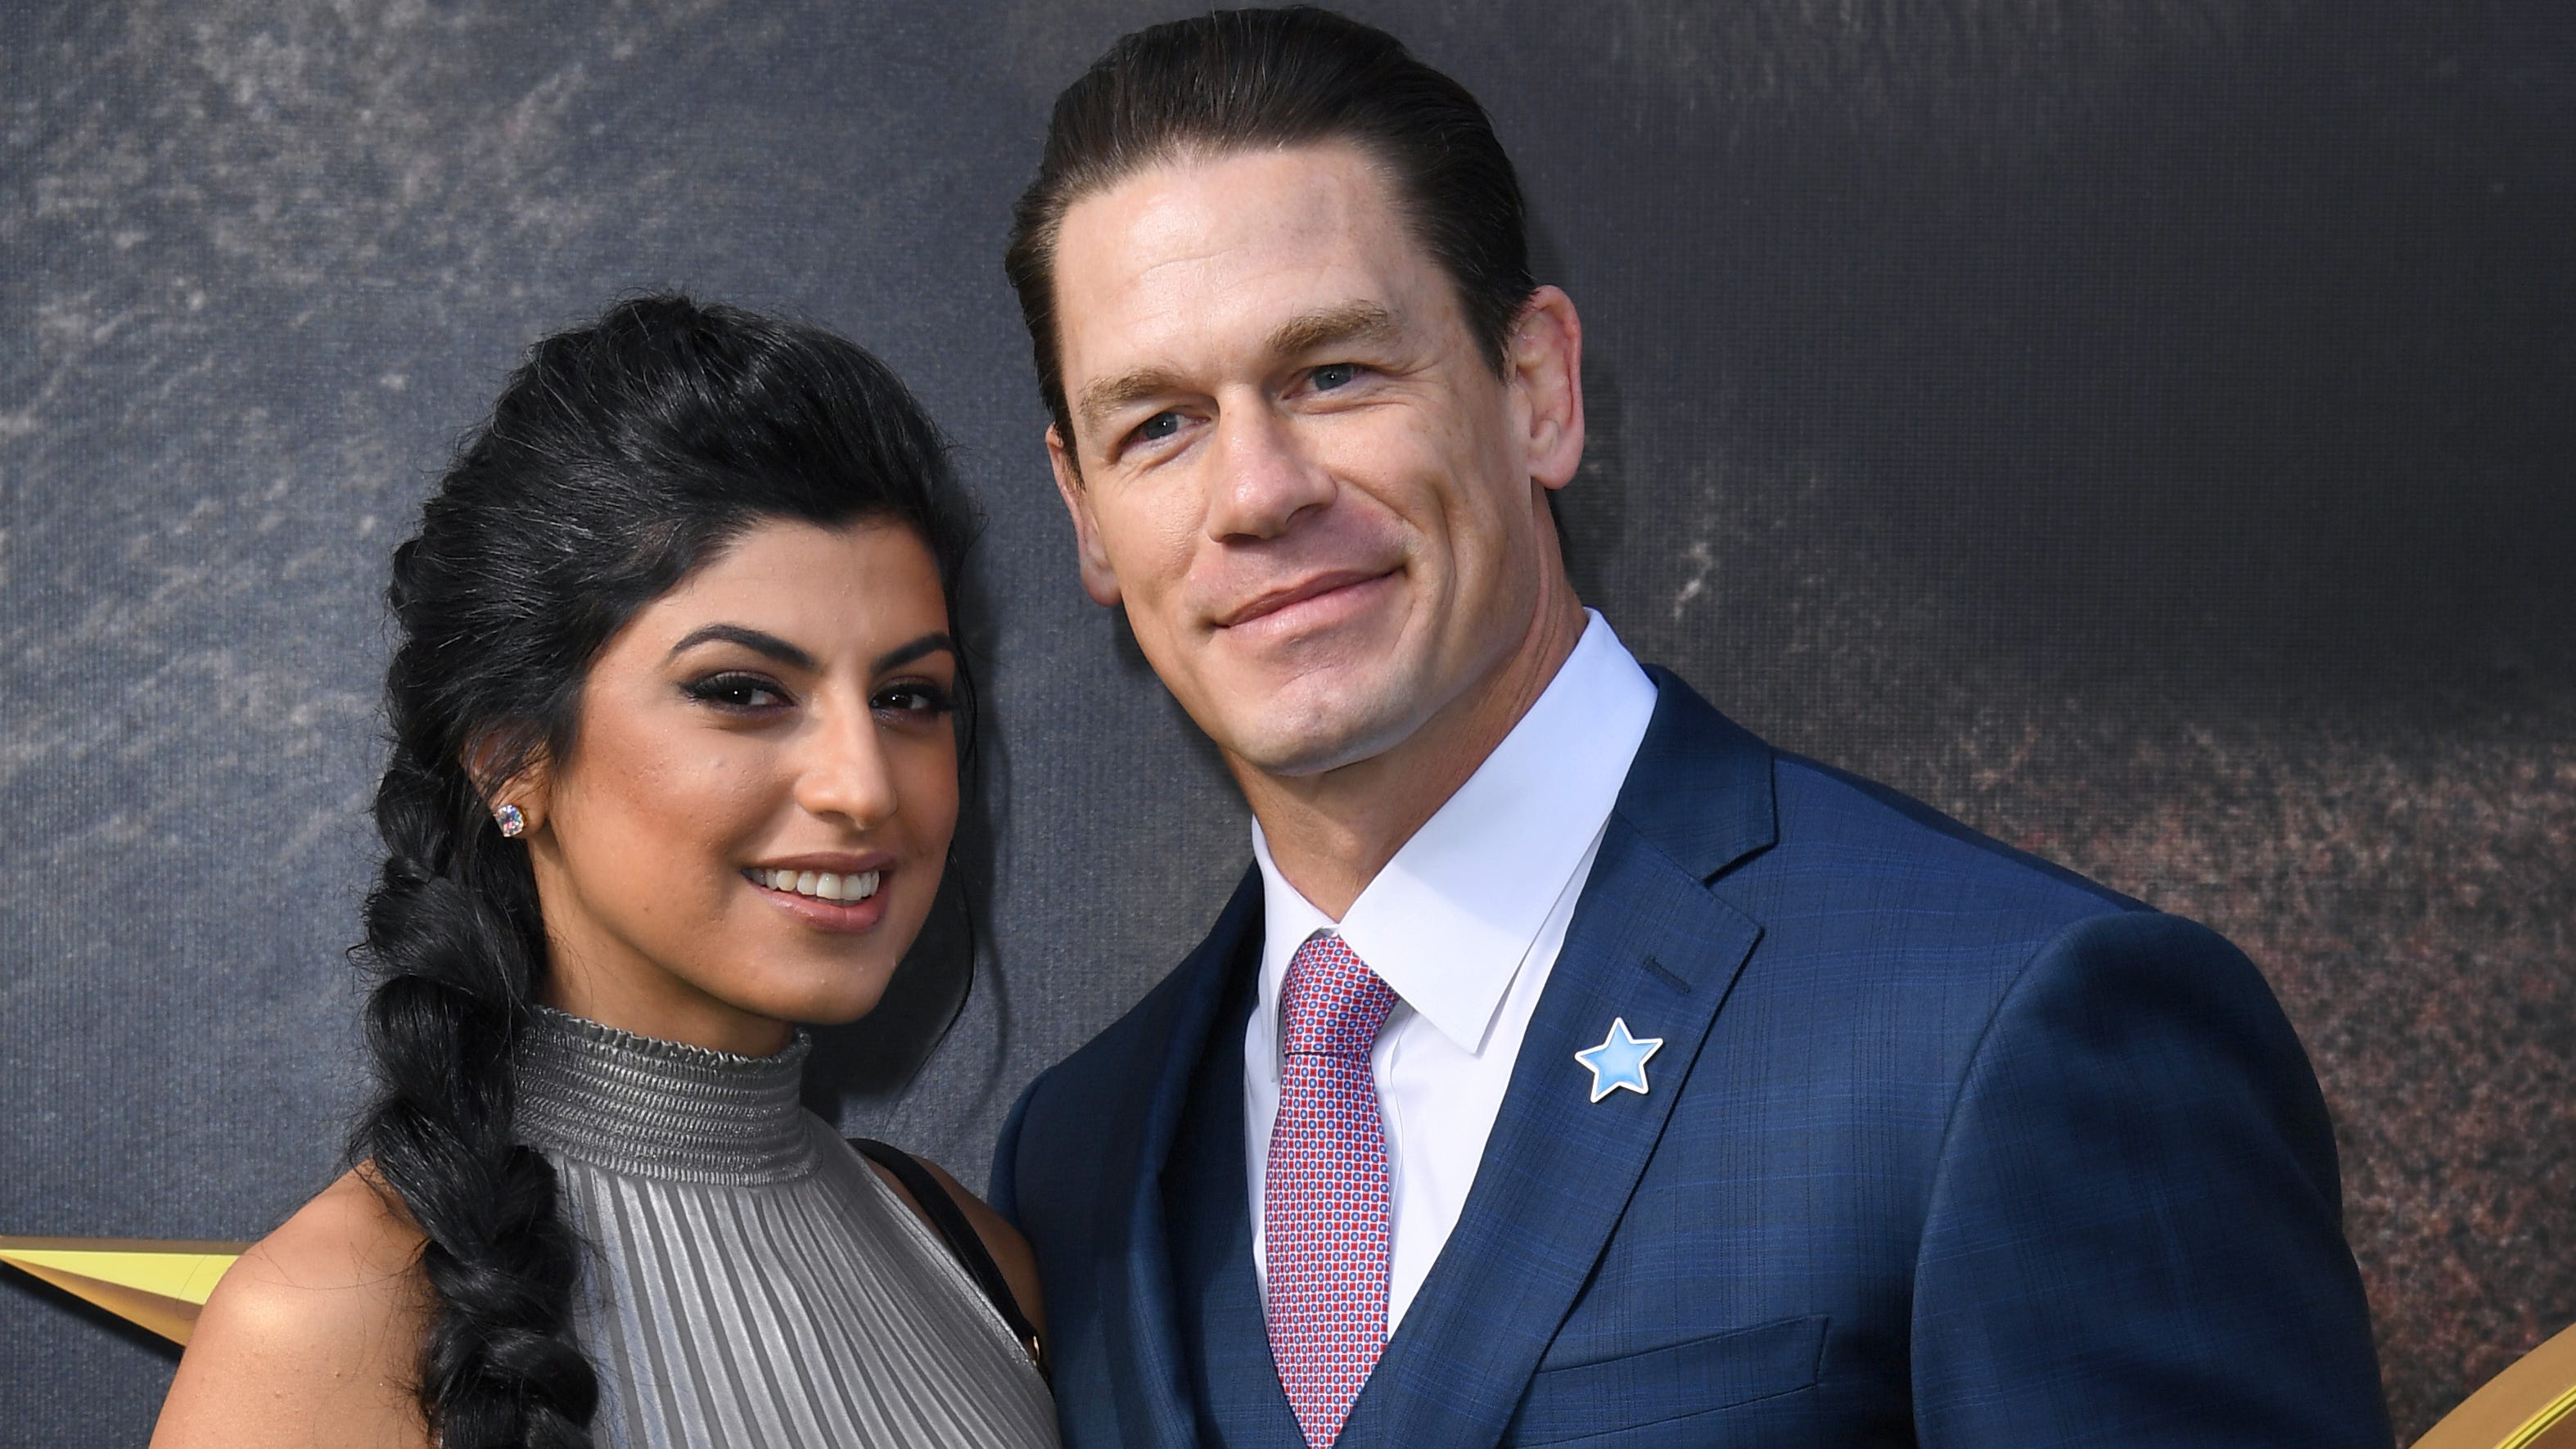 John Cena Reportedly Weds Shay Shariatzadeh In Quiet Florida Ceremony